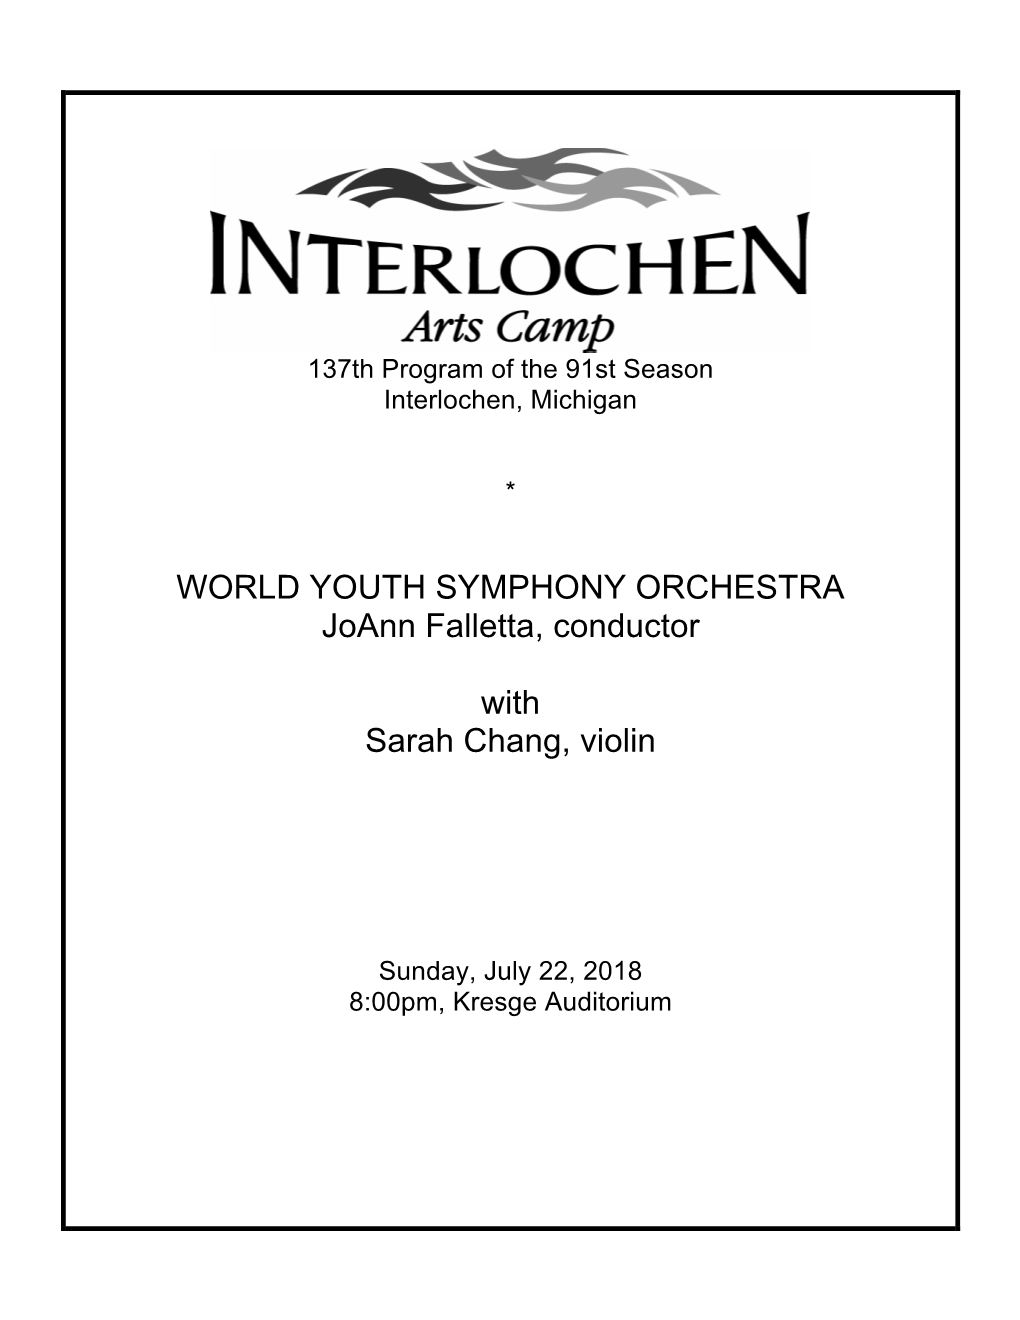 WORLD YOUTH SYMPHONY ORCHESTRA Joann Falletta, Conductor